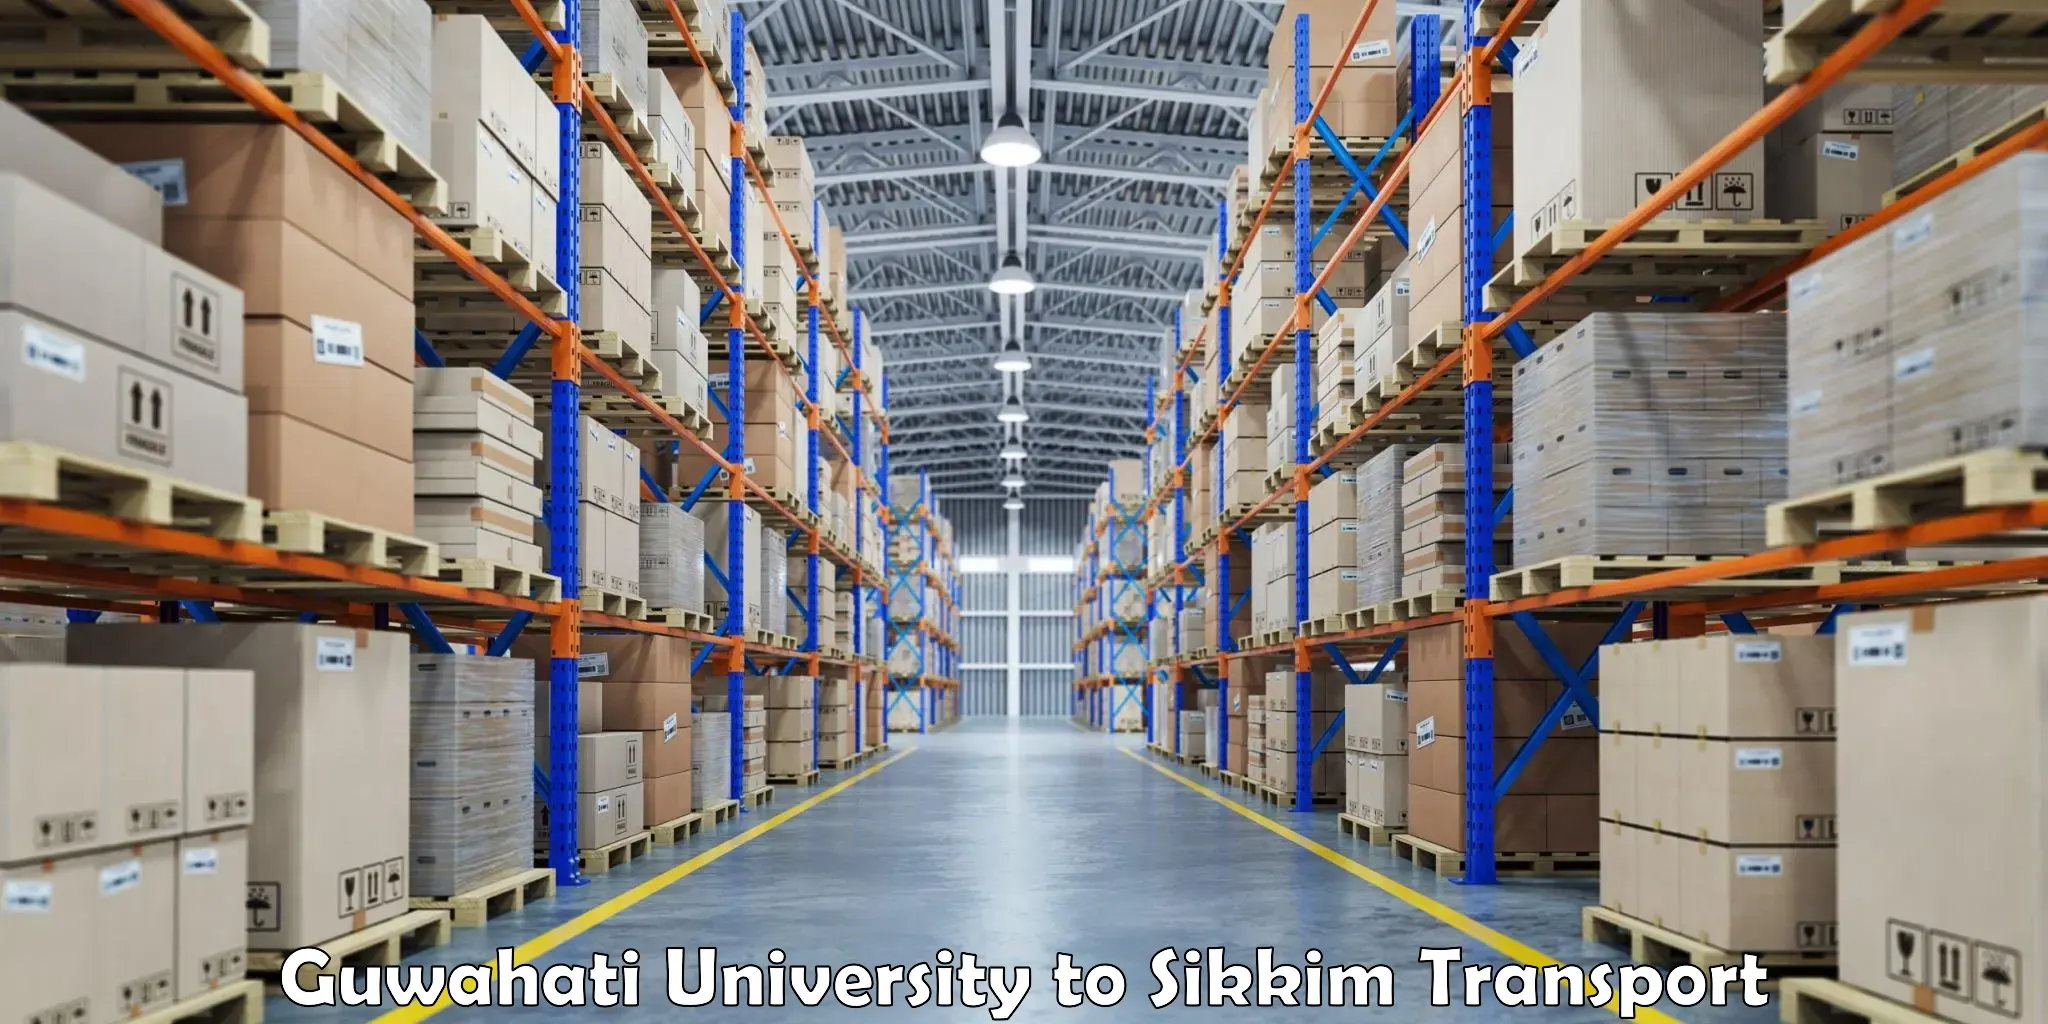 Furniture transport service Guwahati University to Gangtok